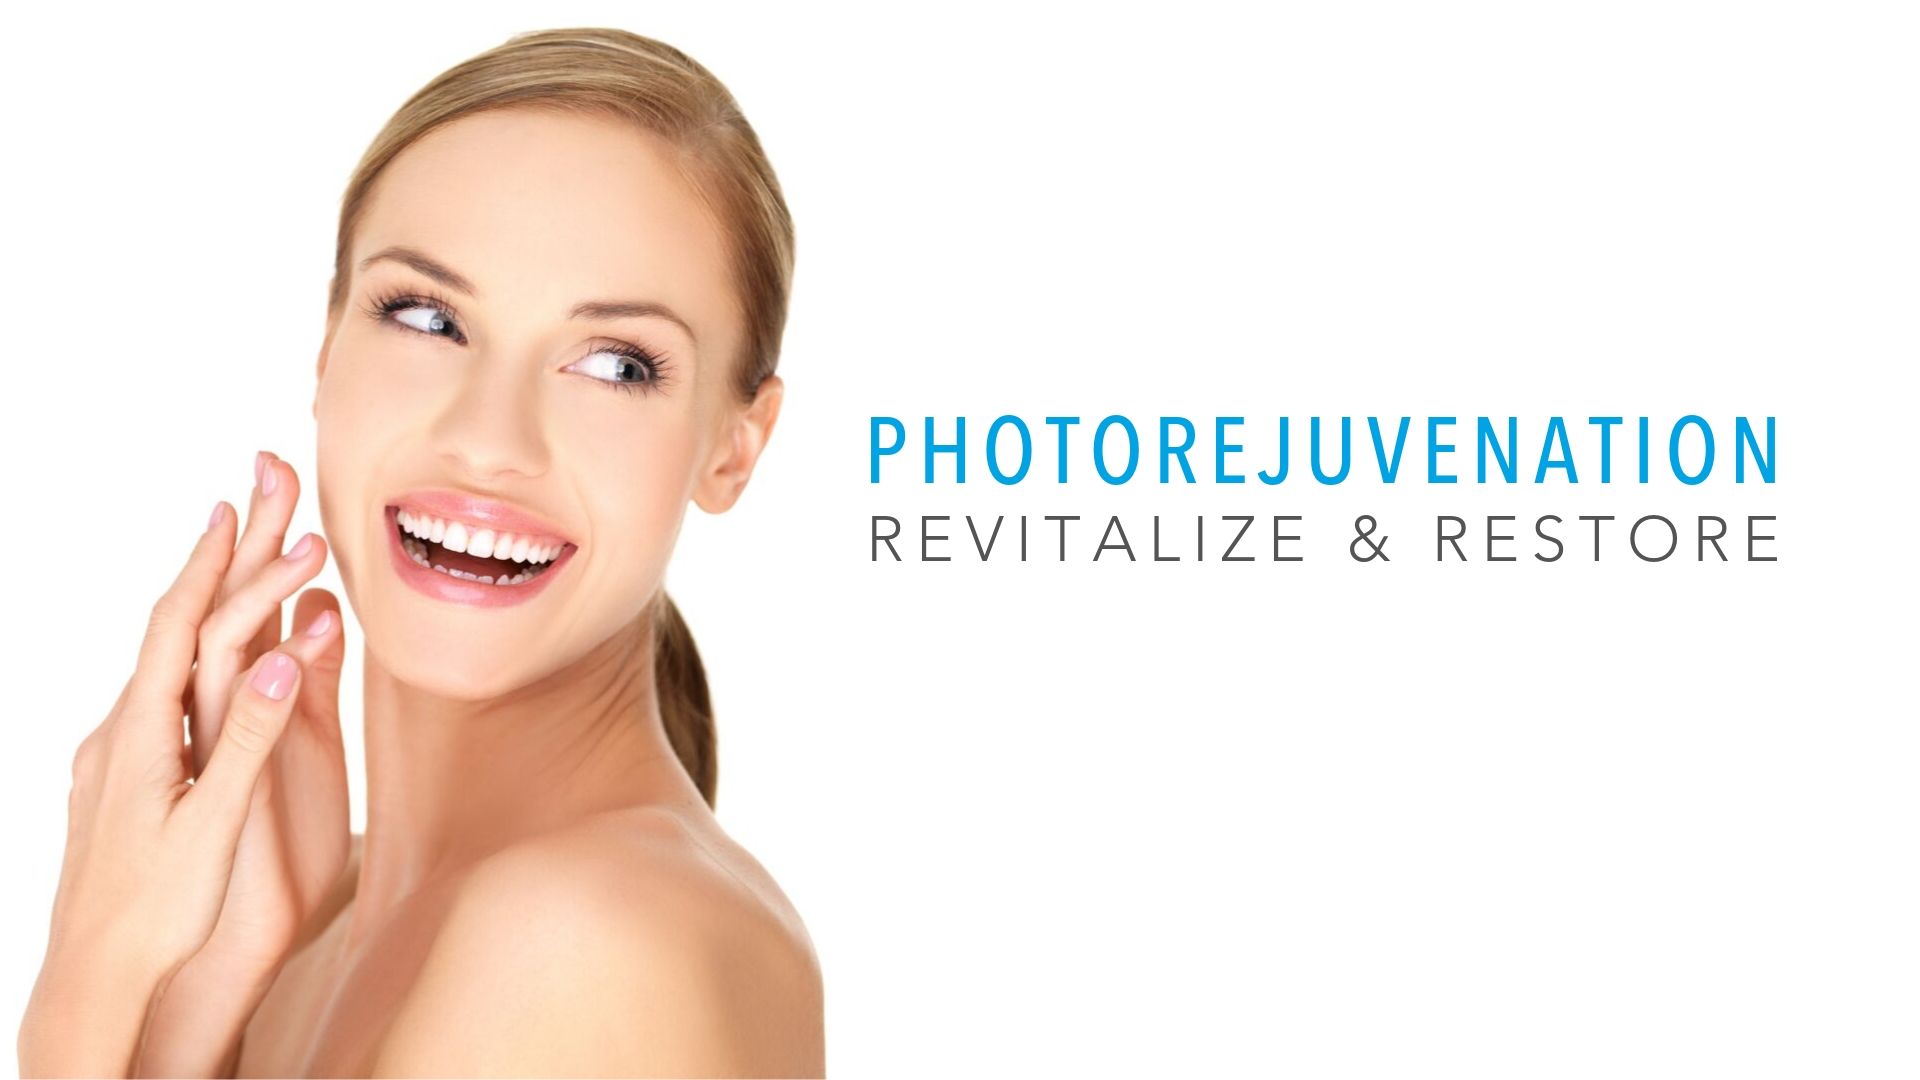 Woman smiling after photorejuvenation treatment at shore medical aesthetics.